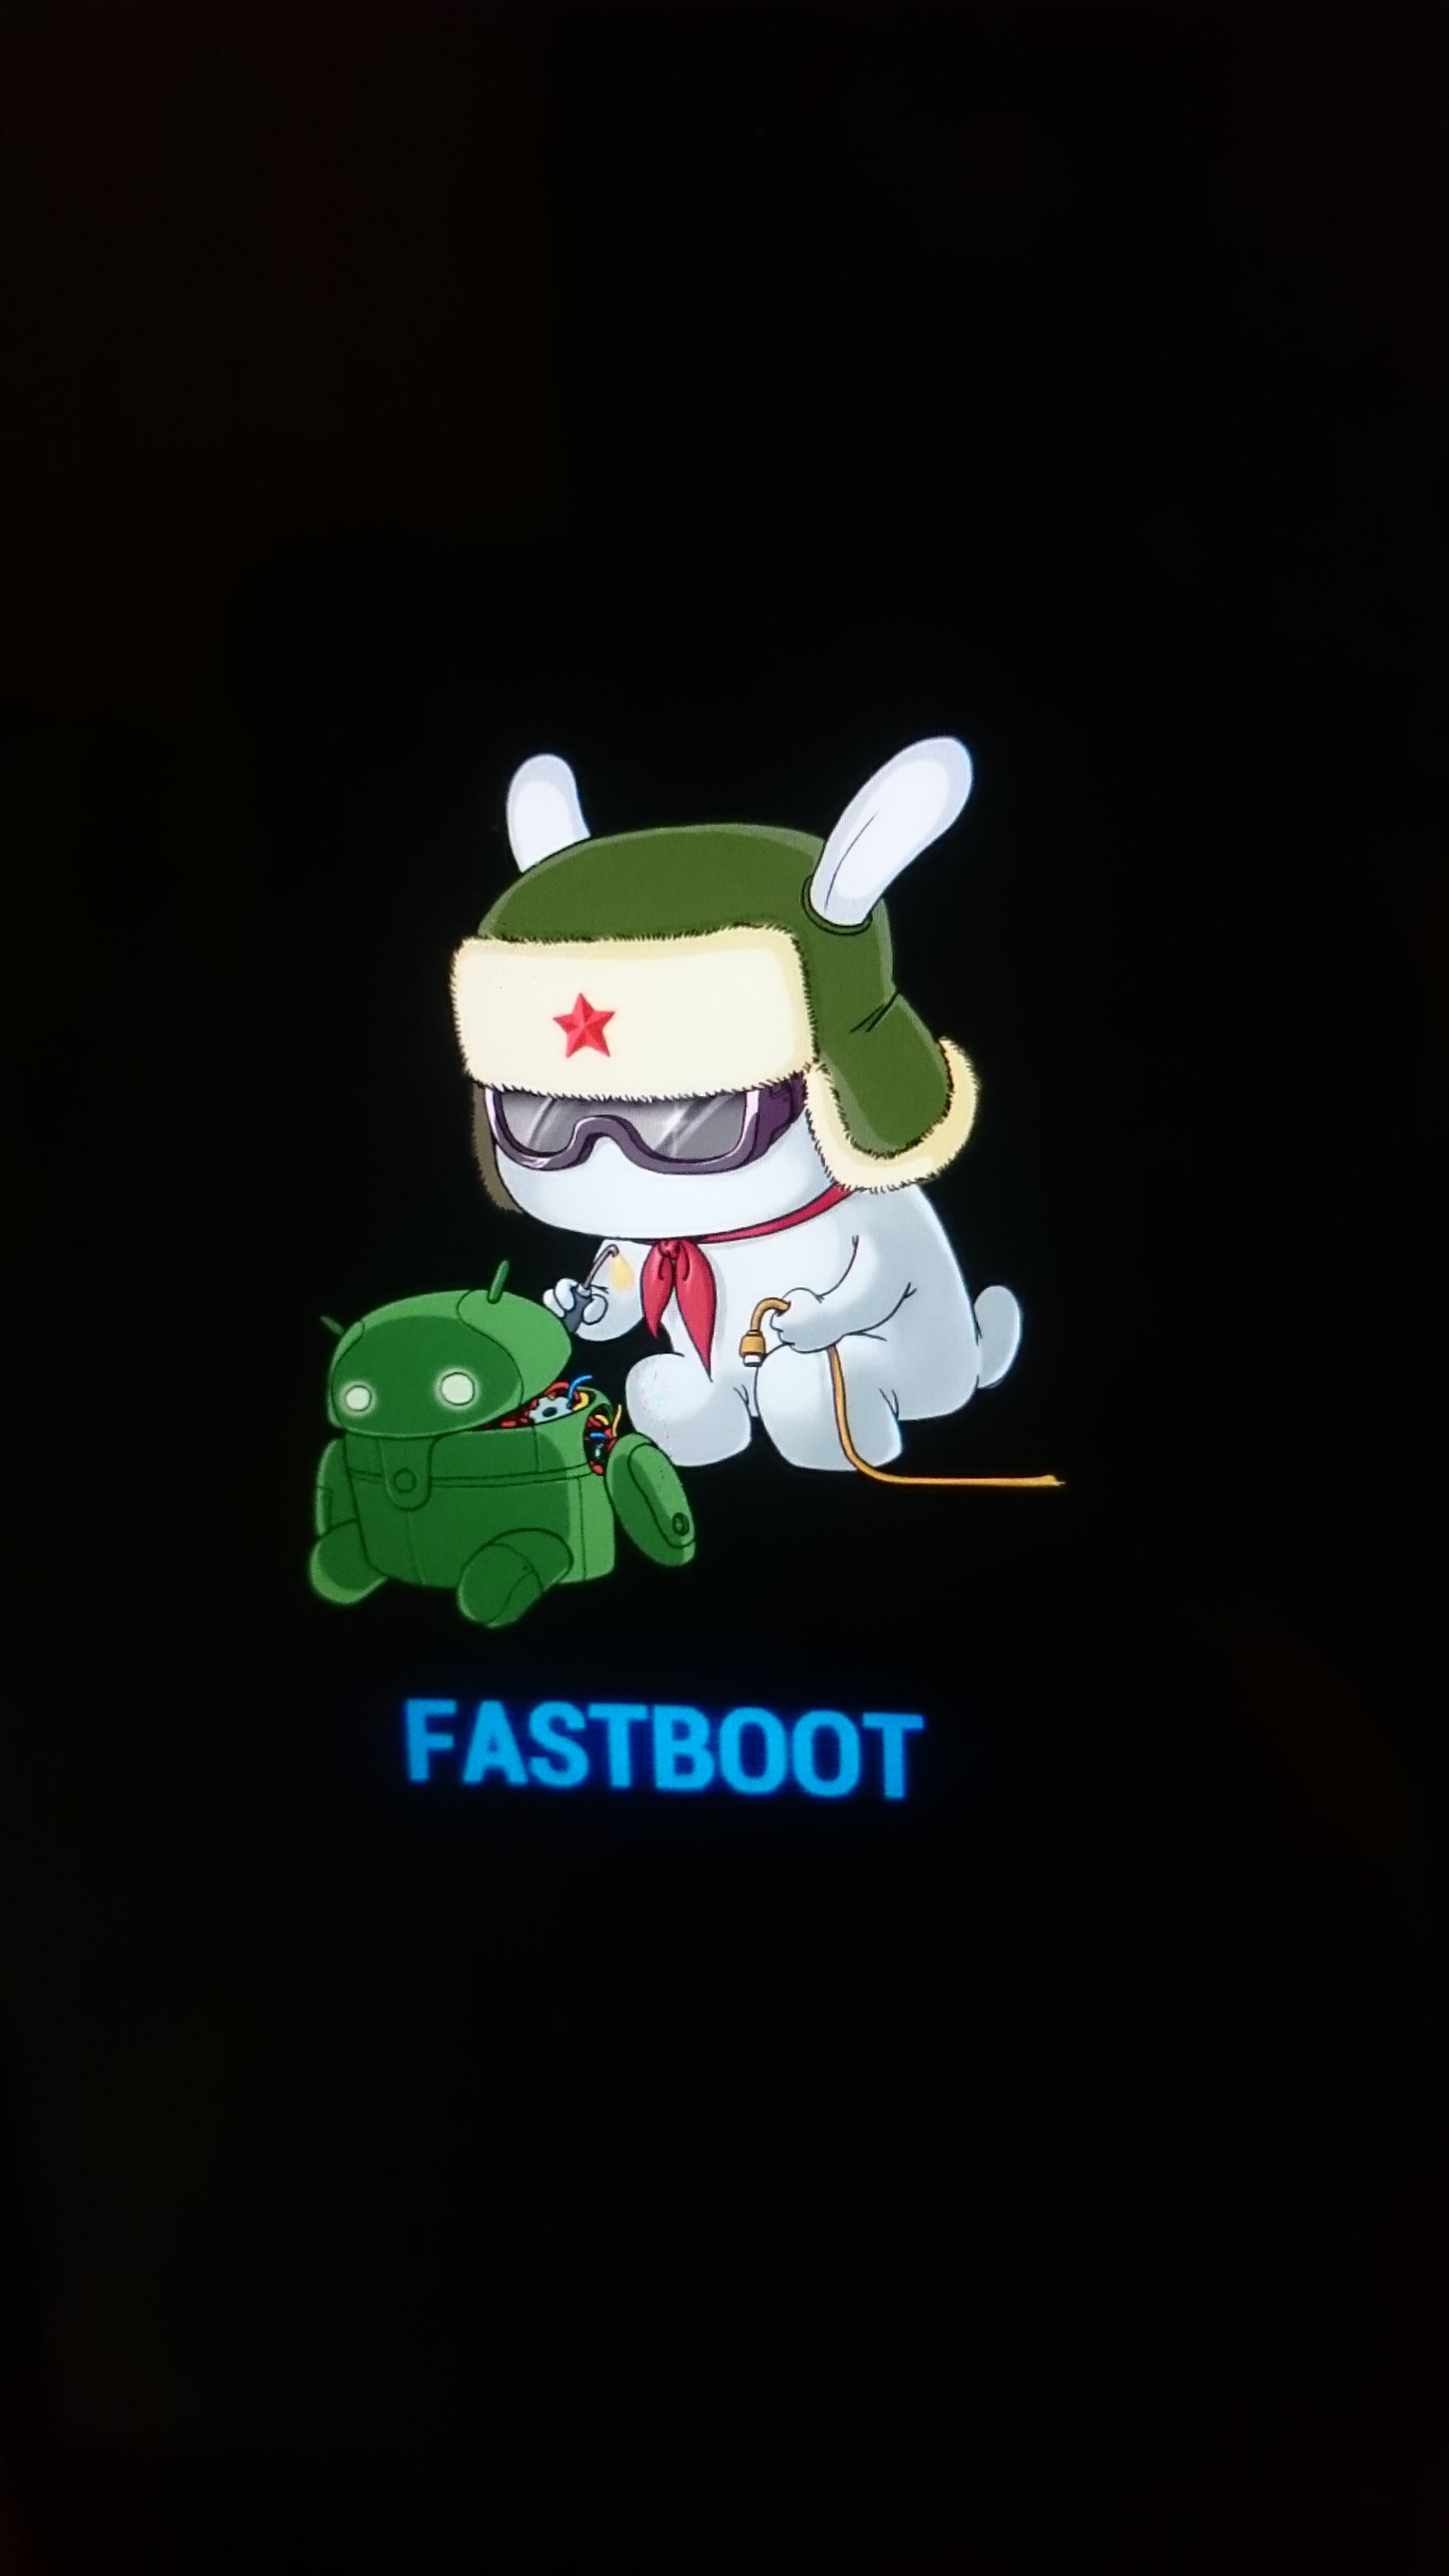 На экране вылез андроид. Кролик Xiaomi Fastboot. Заяц андроид Fastboot. Xiaomi заяц Fastboot logo. Андроид картинка Fastboot.